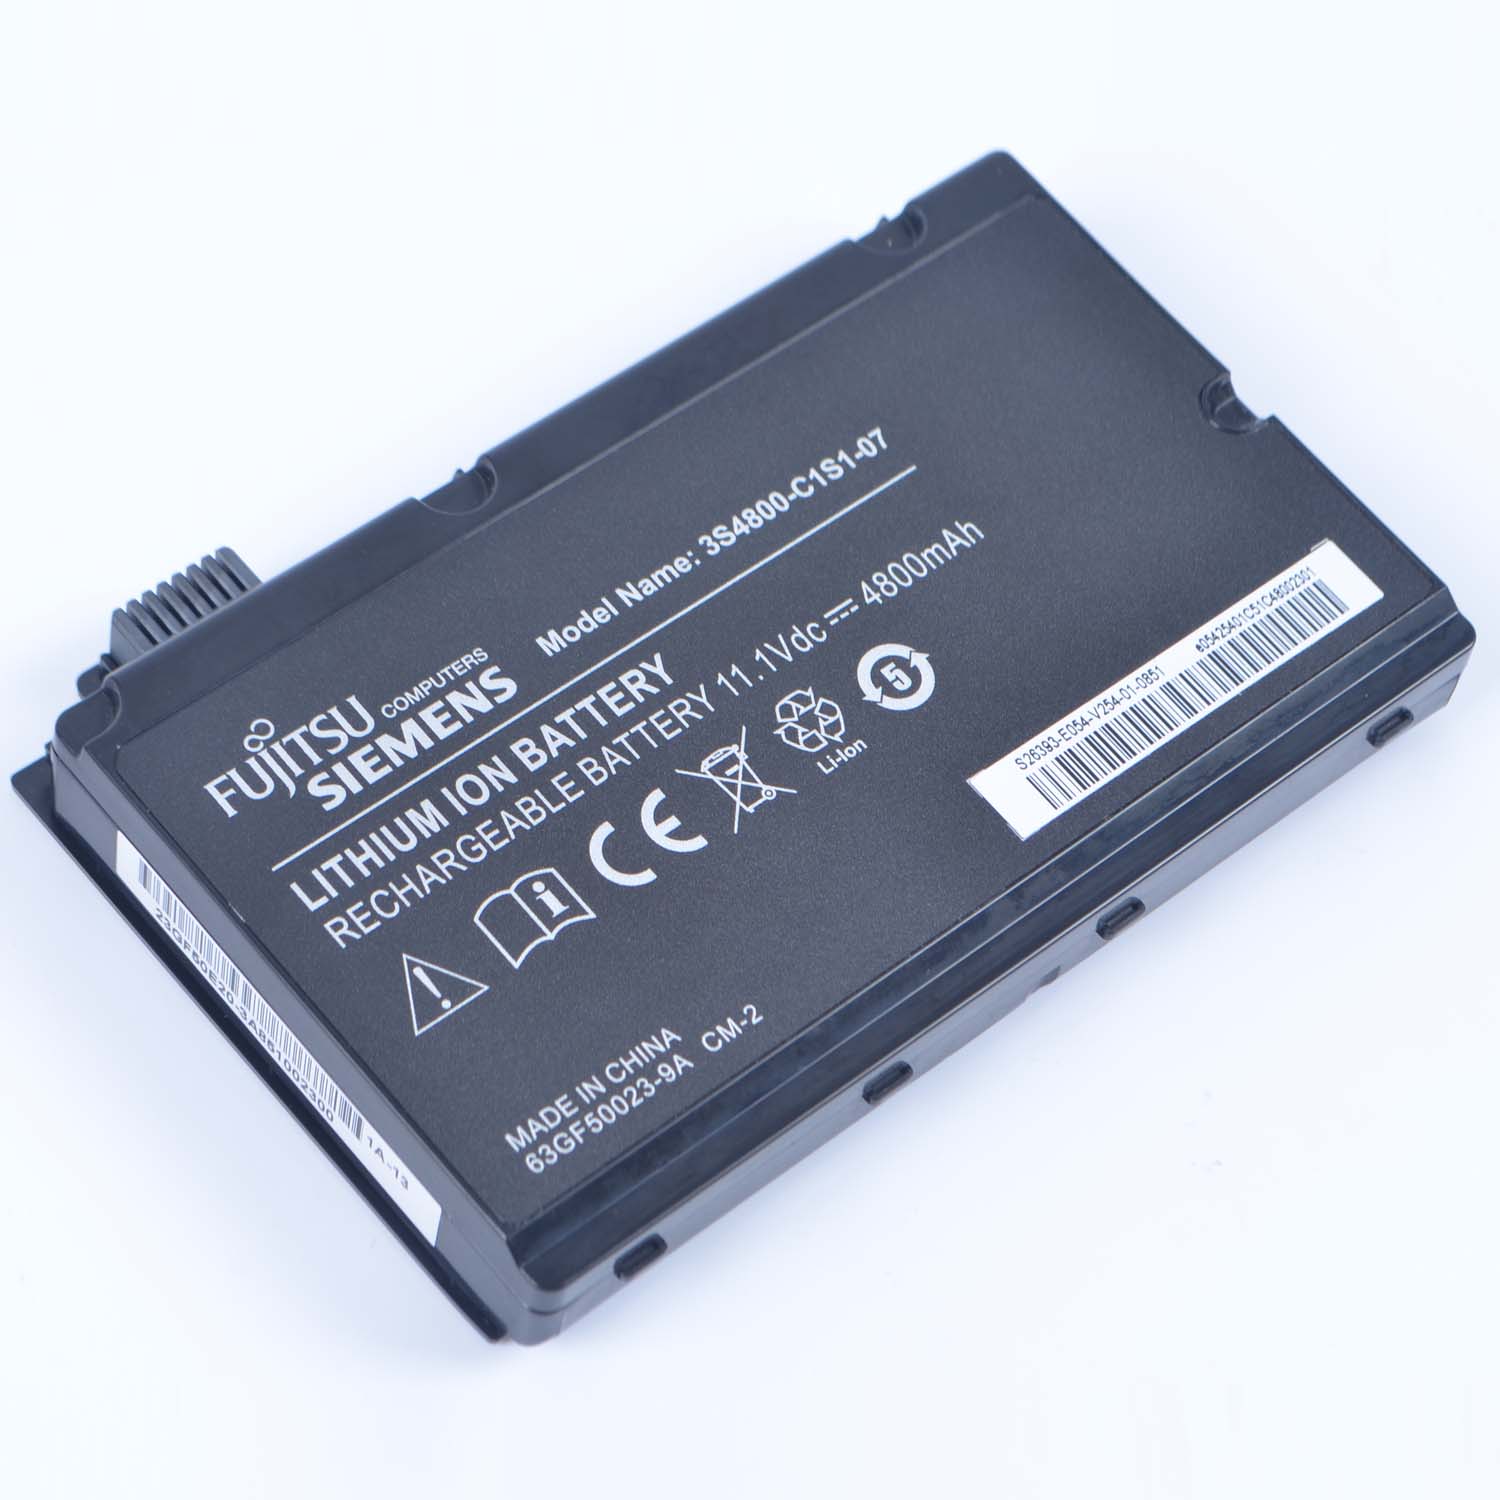 Fujitsu-Siemens Amilo Pi2530 Pi2550 Pi3540 Series laptop battery